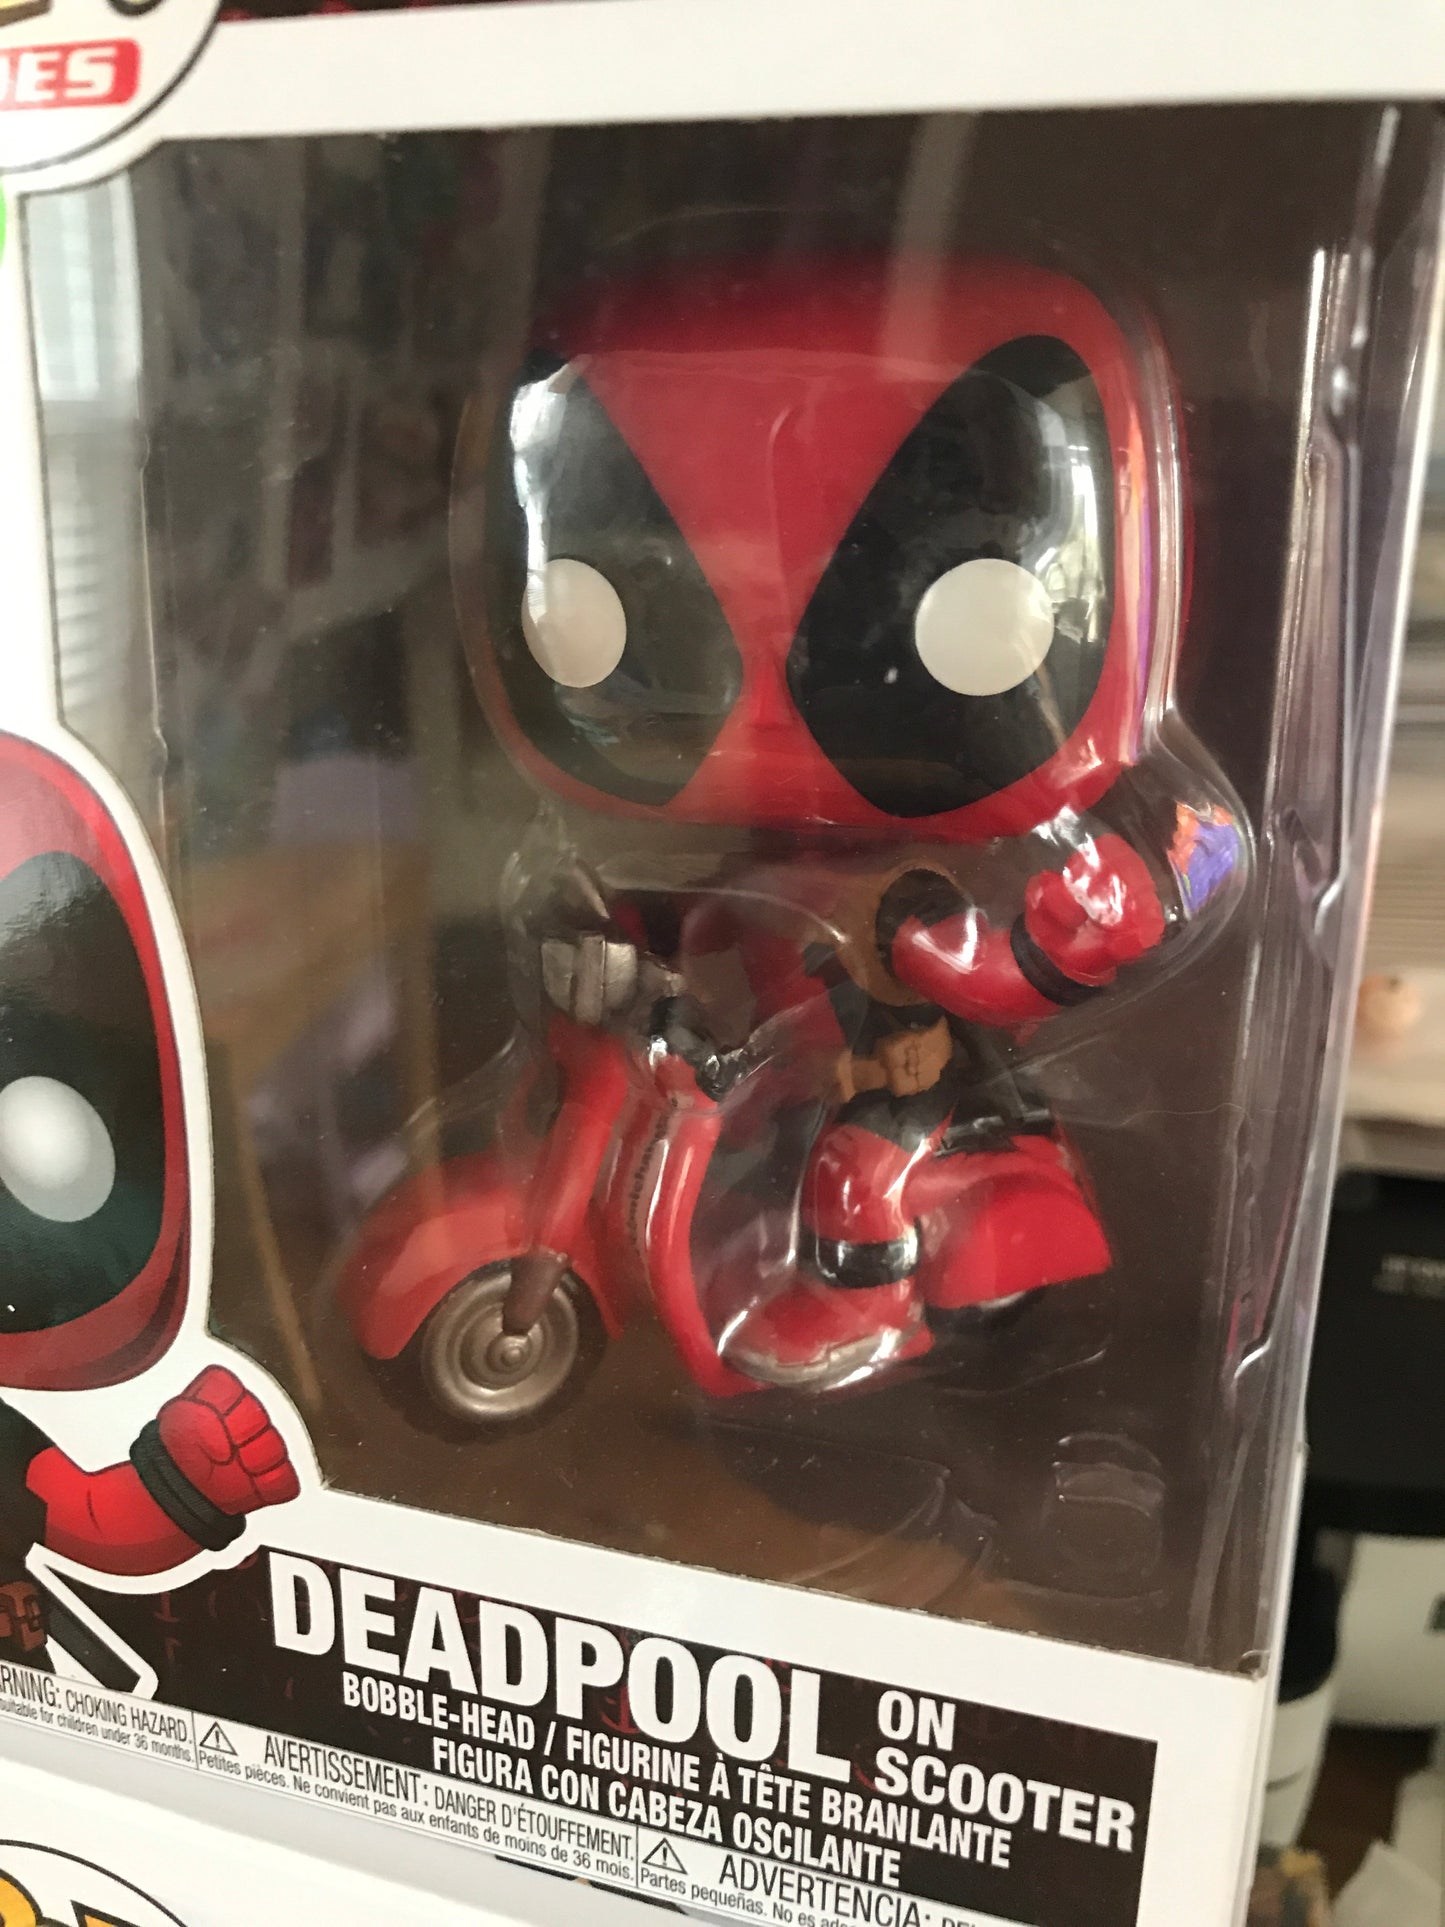 Deadpool on scooter 48 Funko Pop! vinyl figure marvel